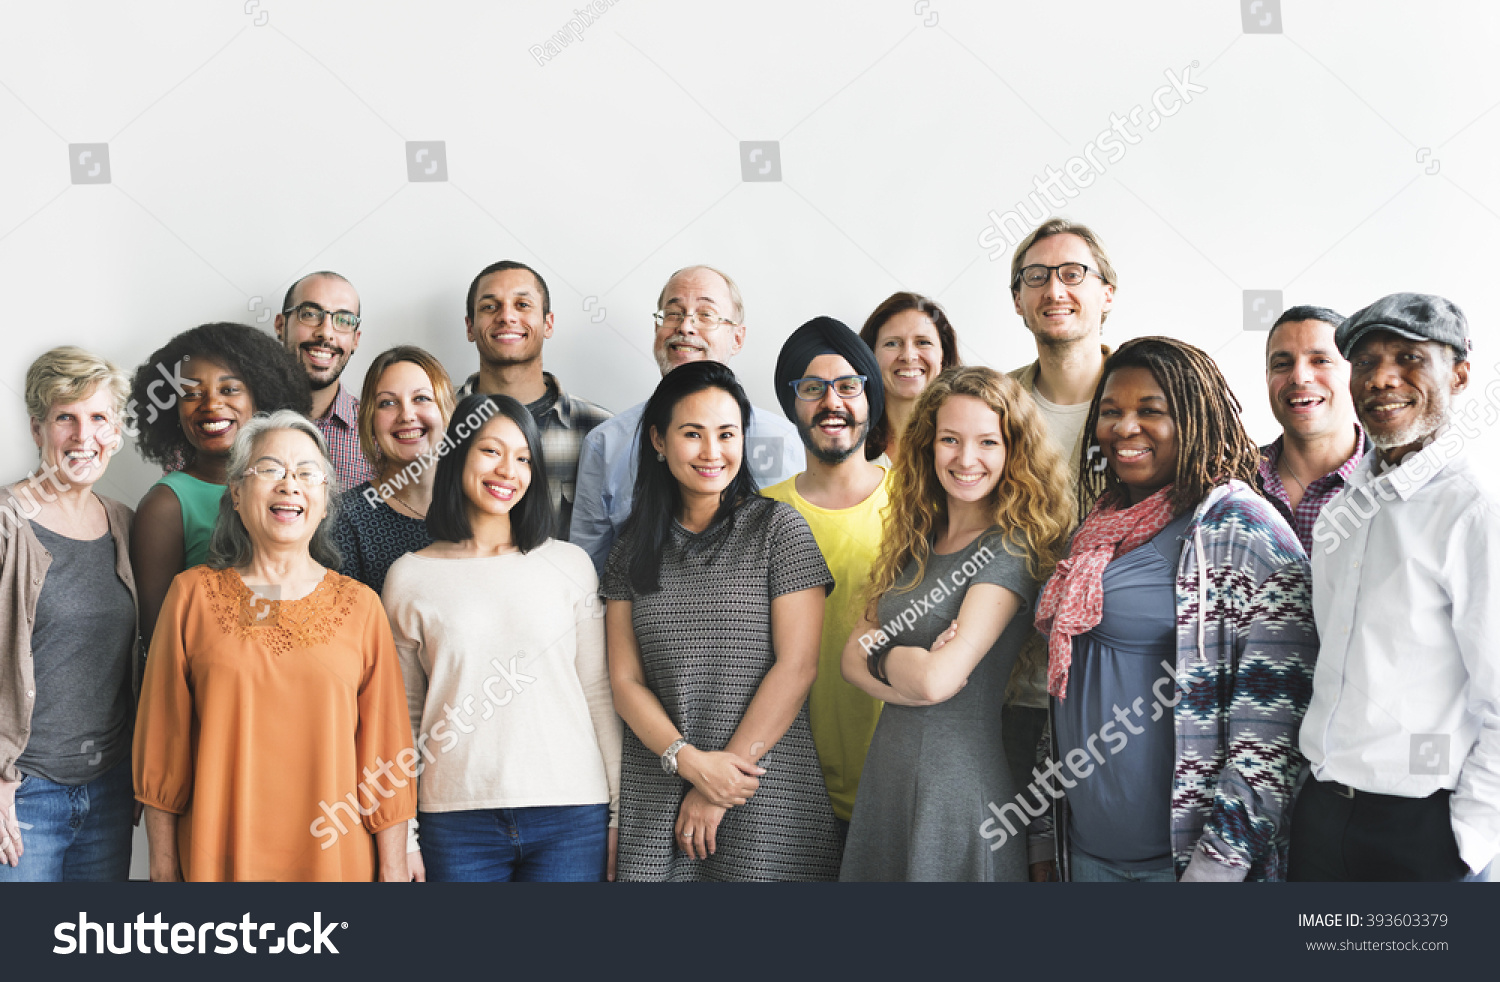 Diversity People Group Team Union Concept #393603379